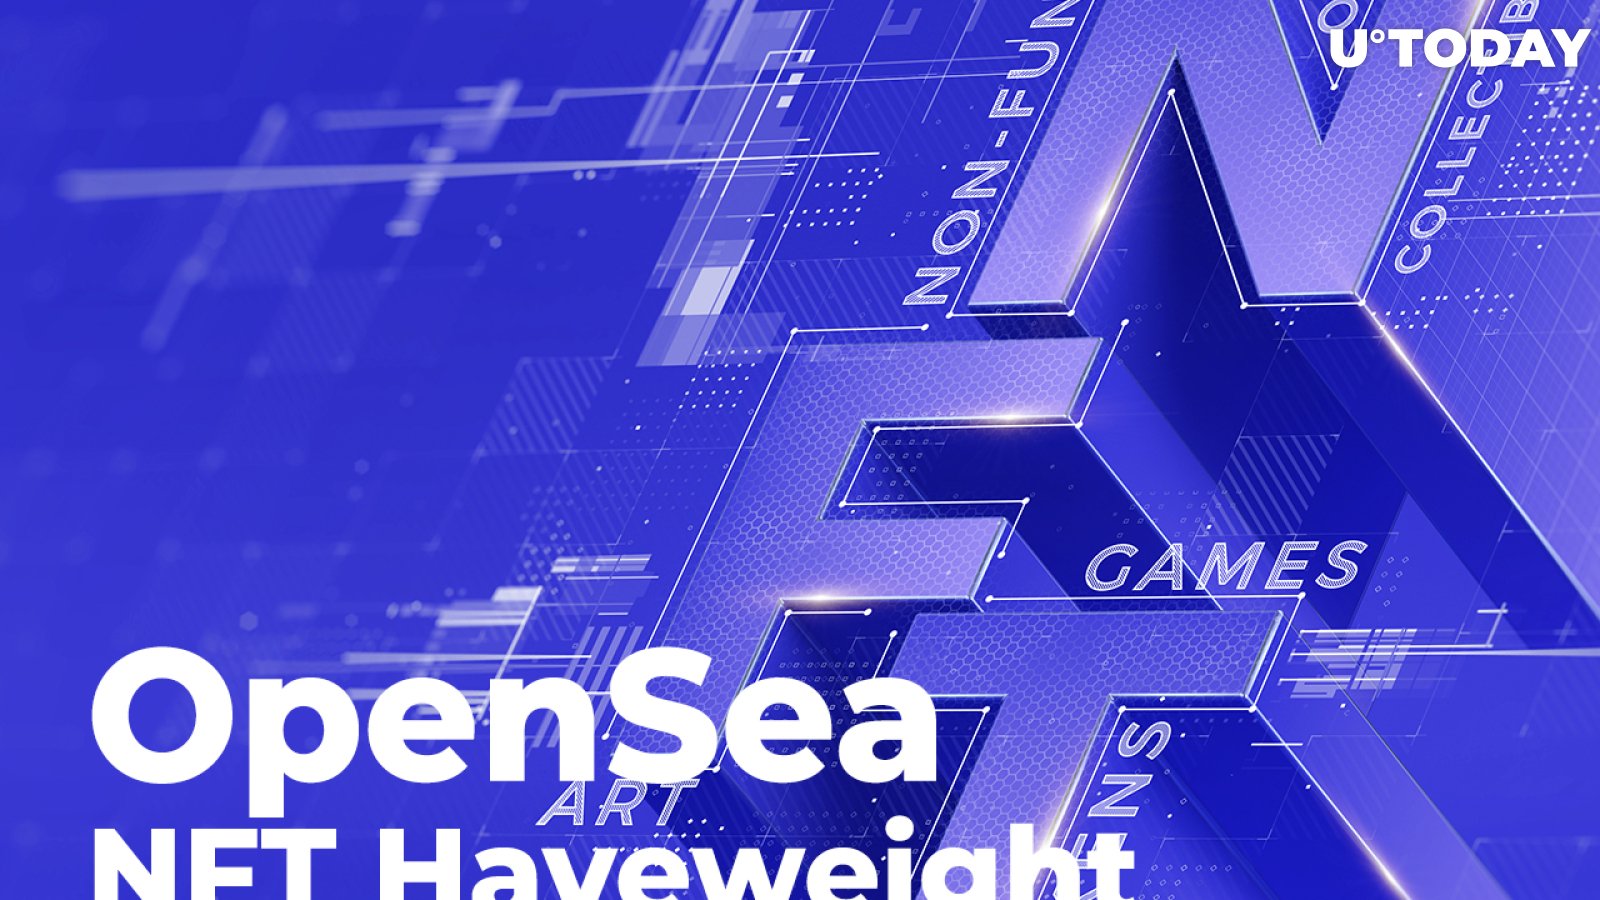 OpenSea NFT Heavyweight Made $12 Billion in Sales: Zapper Analysts